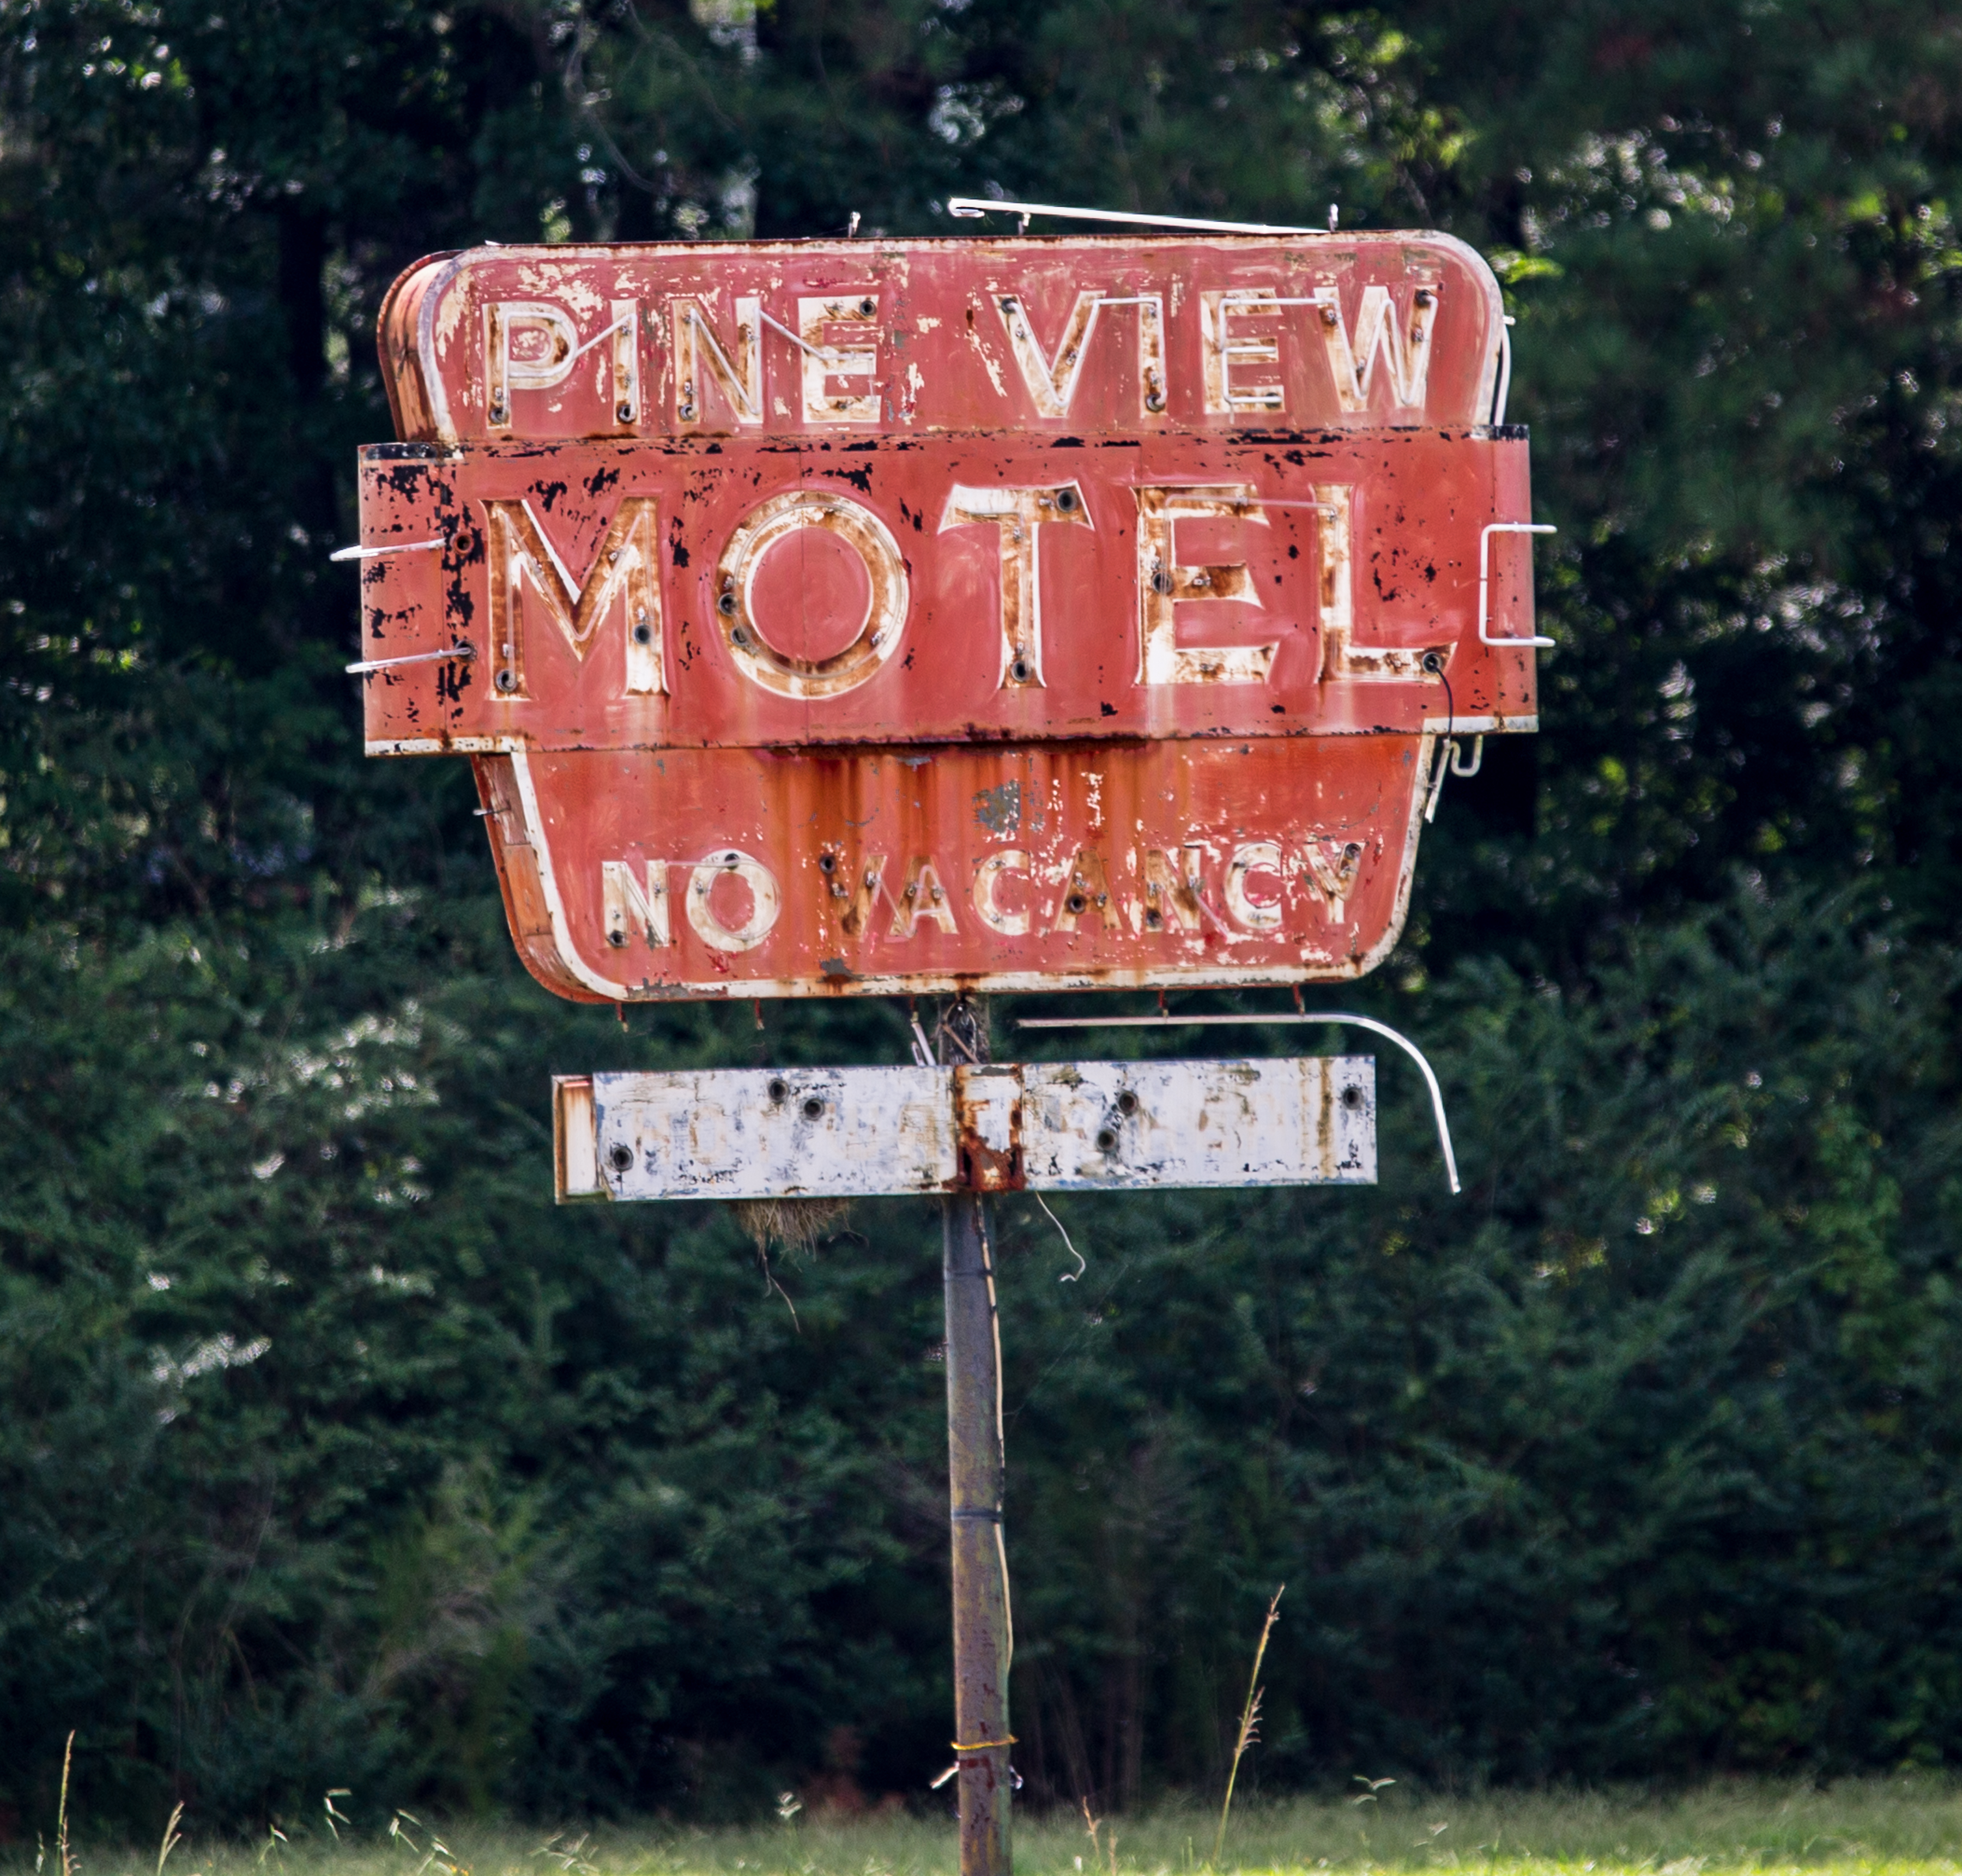 Pine View Motel - Kenly, North Carolina U.S.A. - August 19, 2017